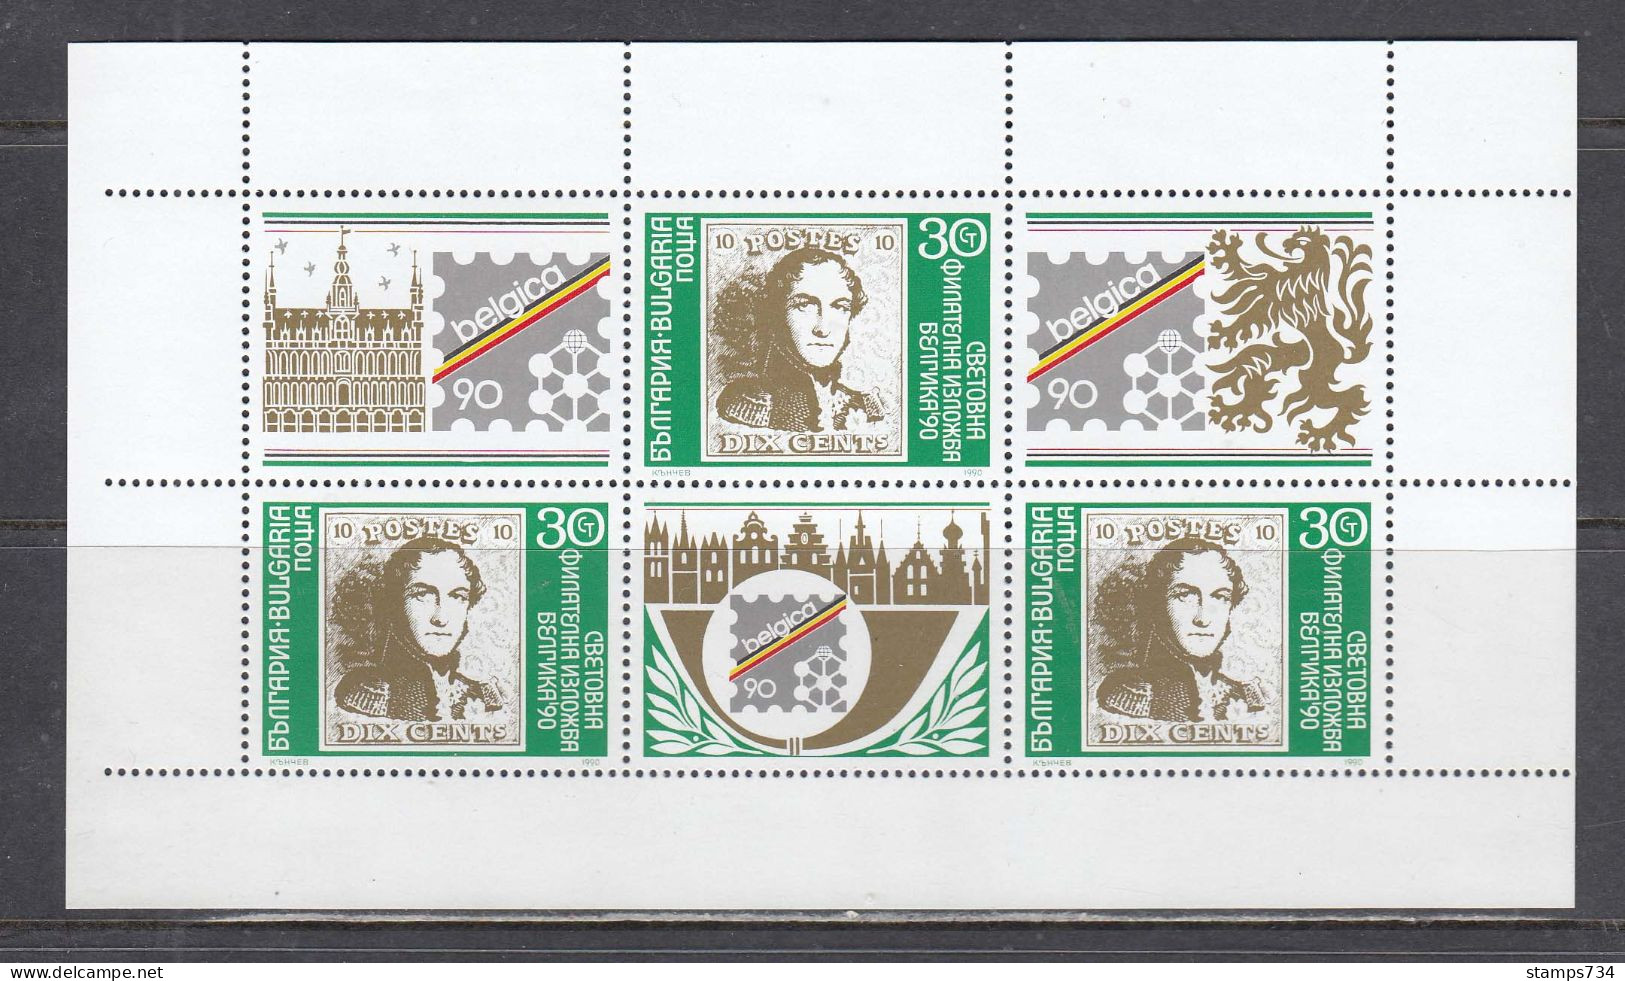 Bulgaria 1990 - International Stamp Exhibition BELGICA'90, Mi-Nr. 3838 In Sheet, MNH** - Unused Stamps